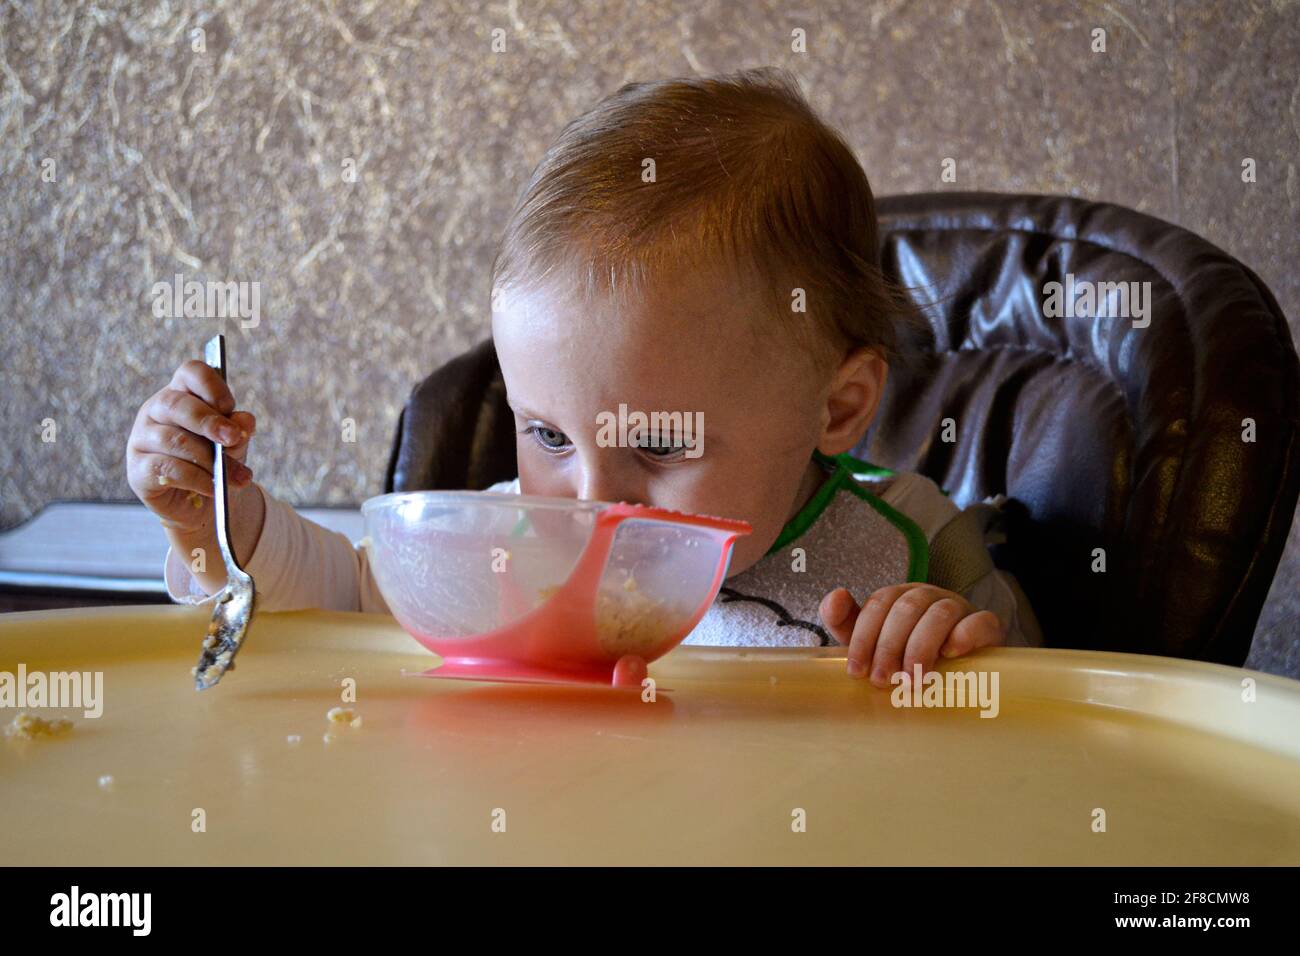 baby girl eating porridge from a bowl Stock Photo